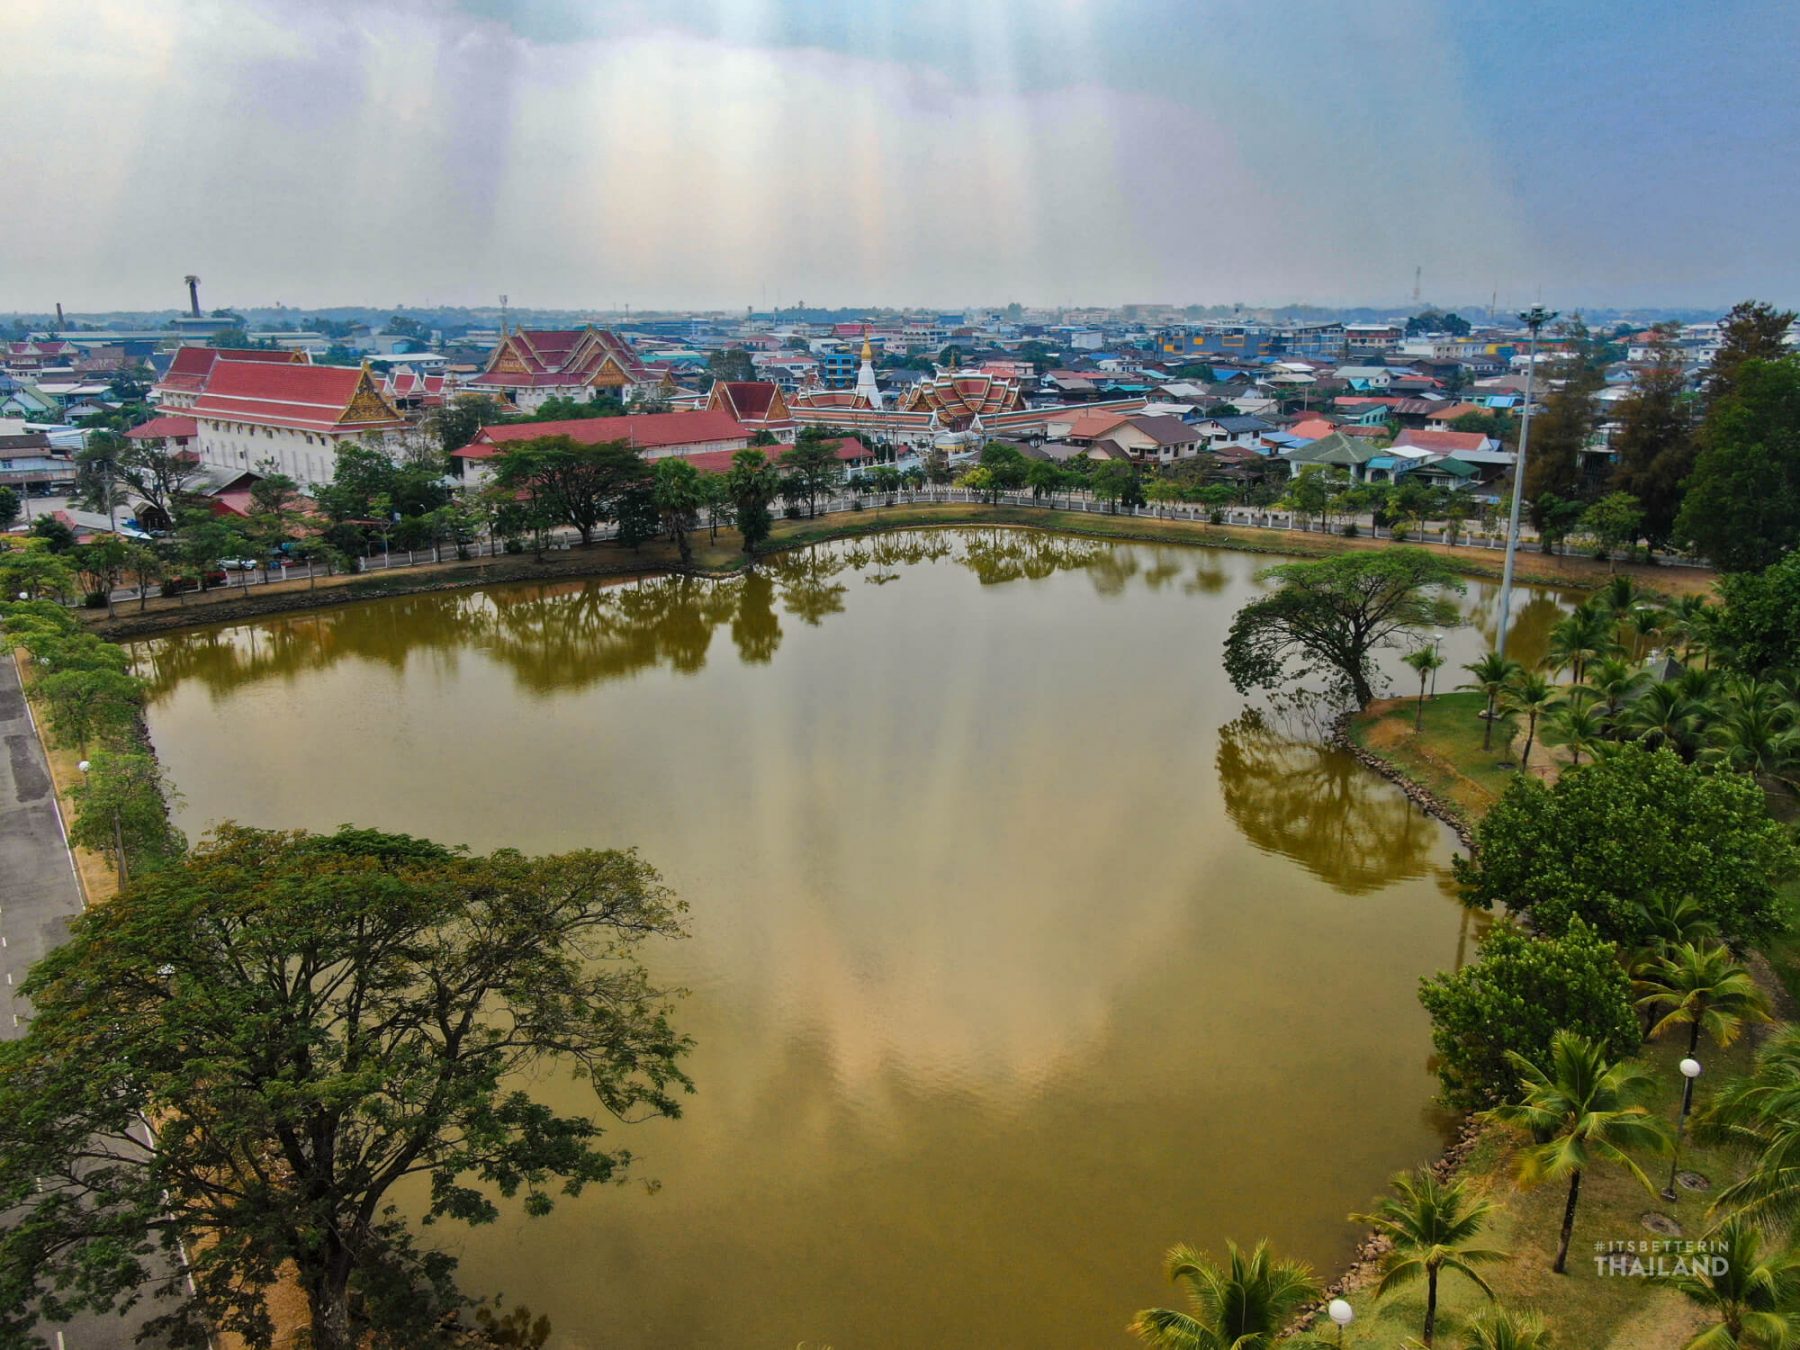 Somdet Phra Srinagarindra Park, Sakon Nakhon - It's better in Thailand